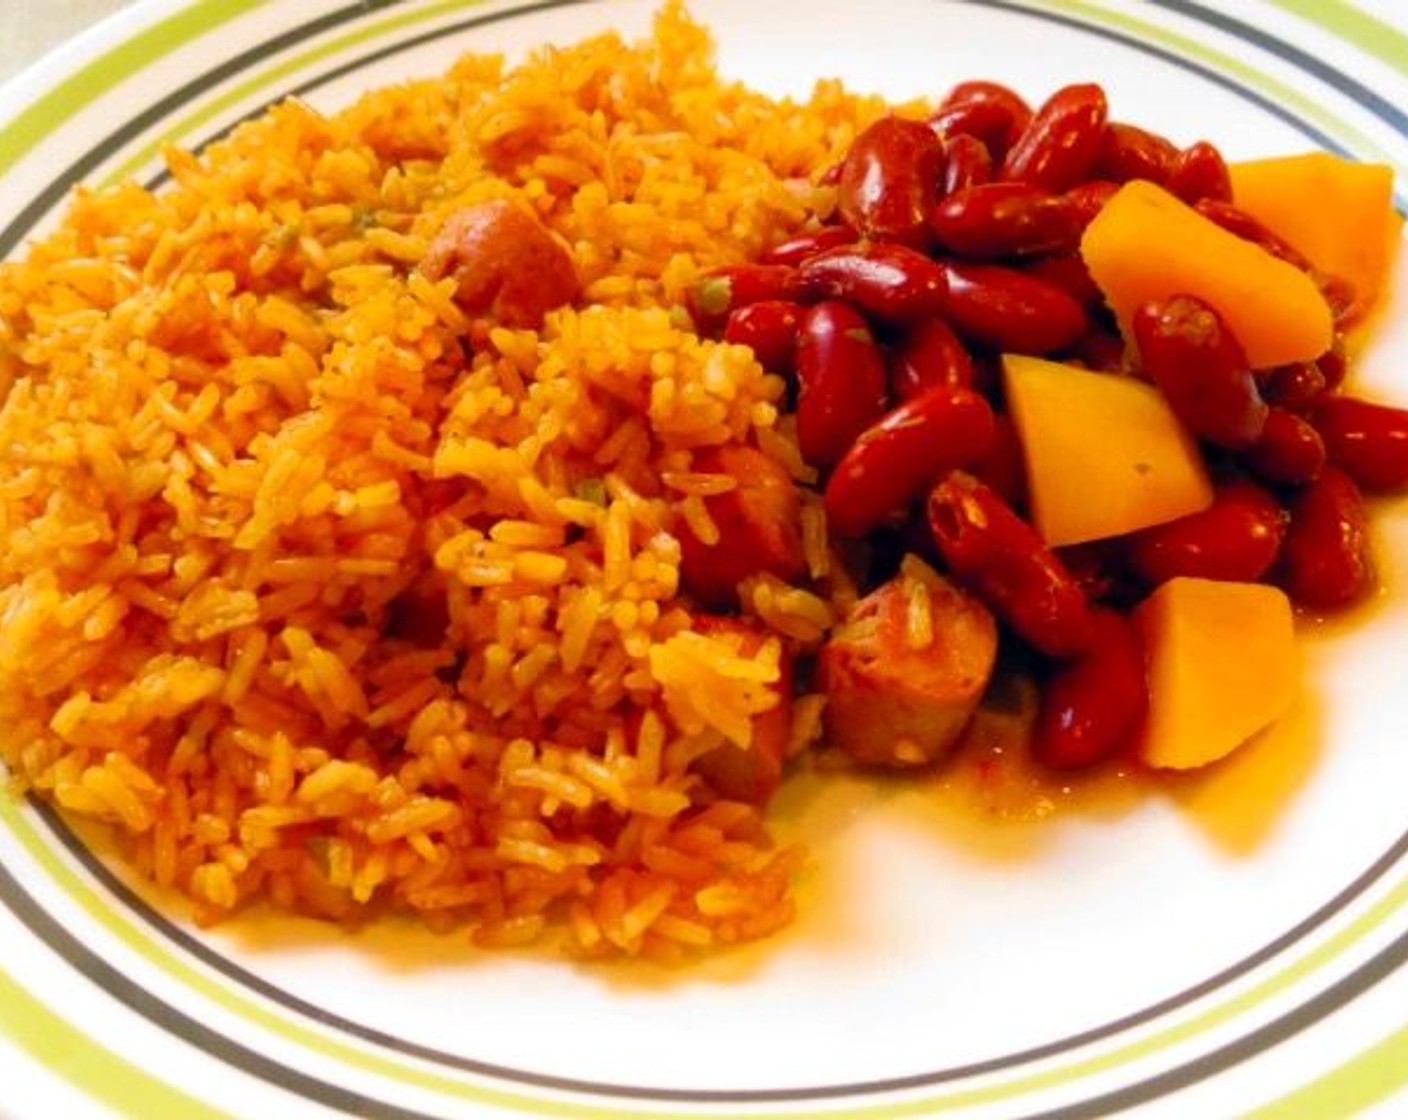 Arroz Con Salchichas (Rice and Sausage)